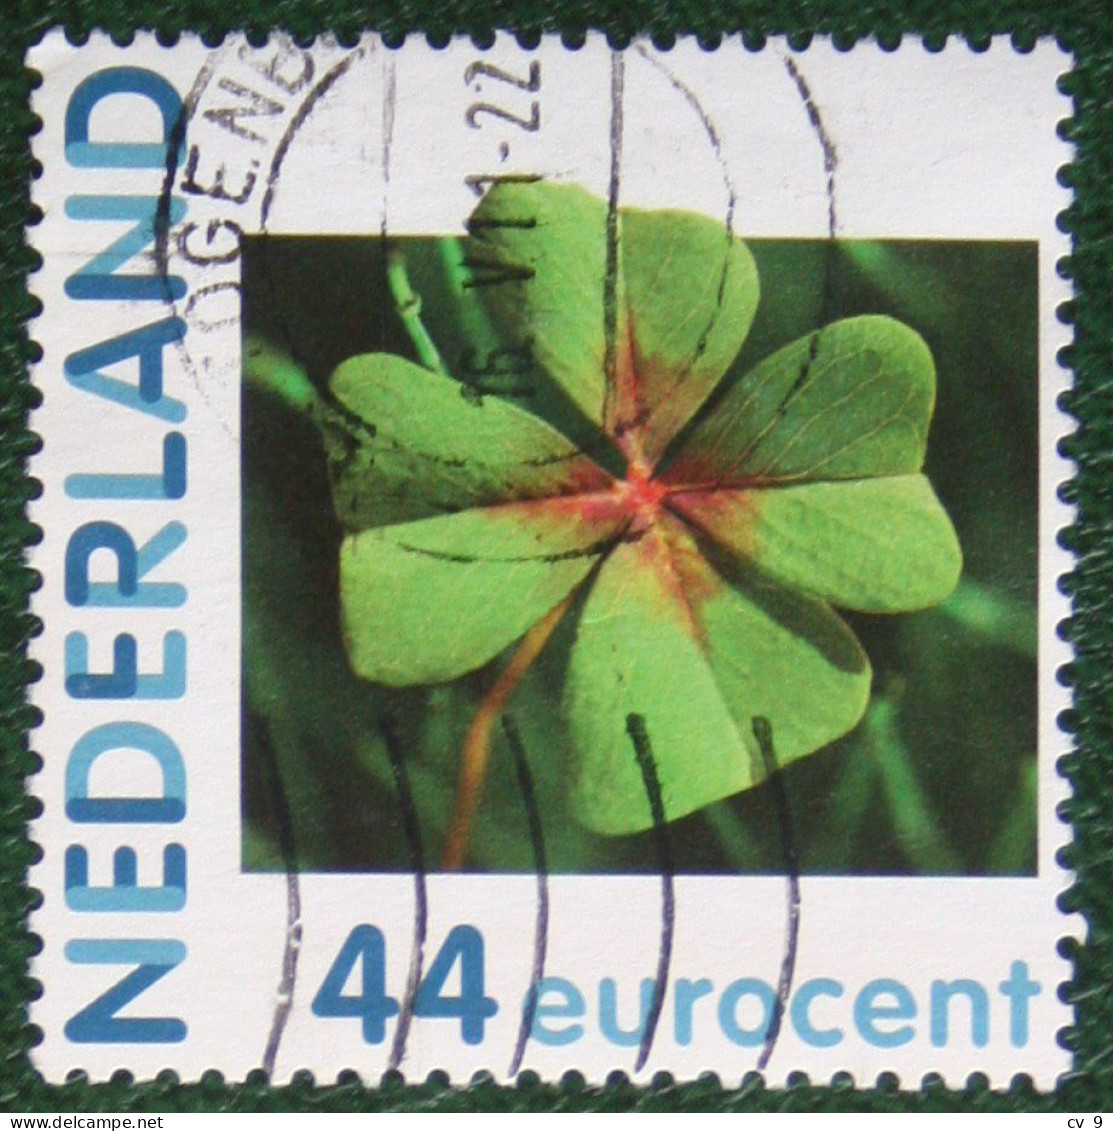 HALLMARK Plant Klaver Vier Persoonlijke Zegel NVPH 2682 Gestempeld / USED / Oblitere NEDERLAND / NIEDERLANDE - Personnalized Stamps